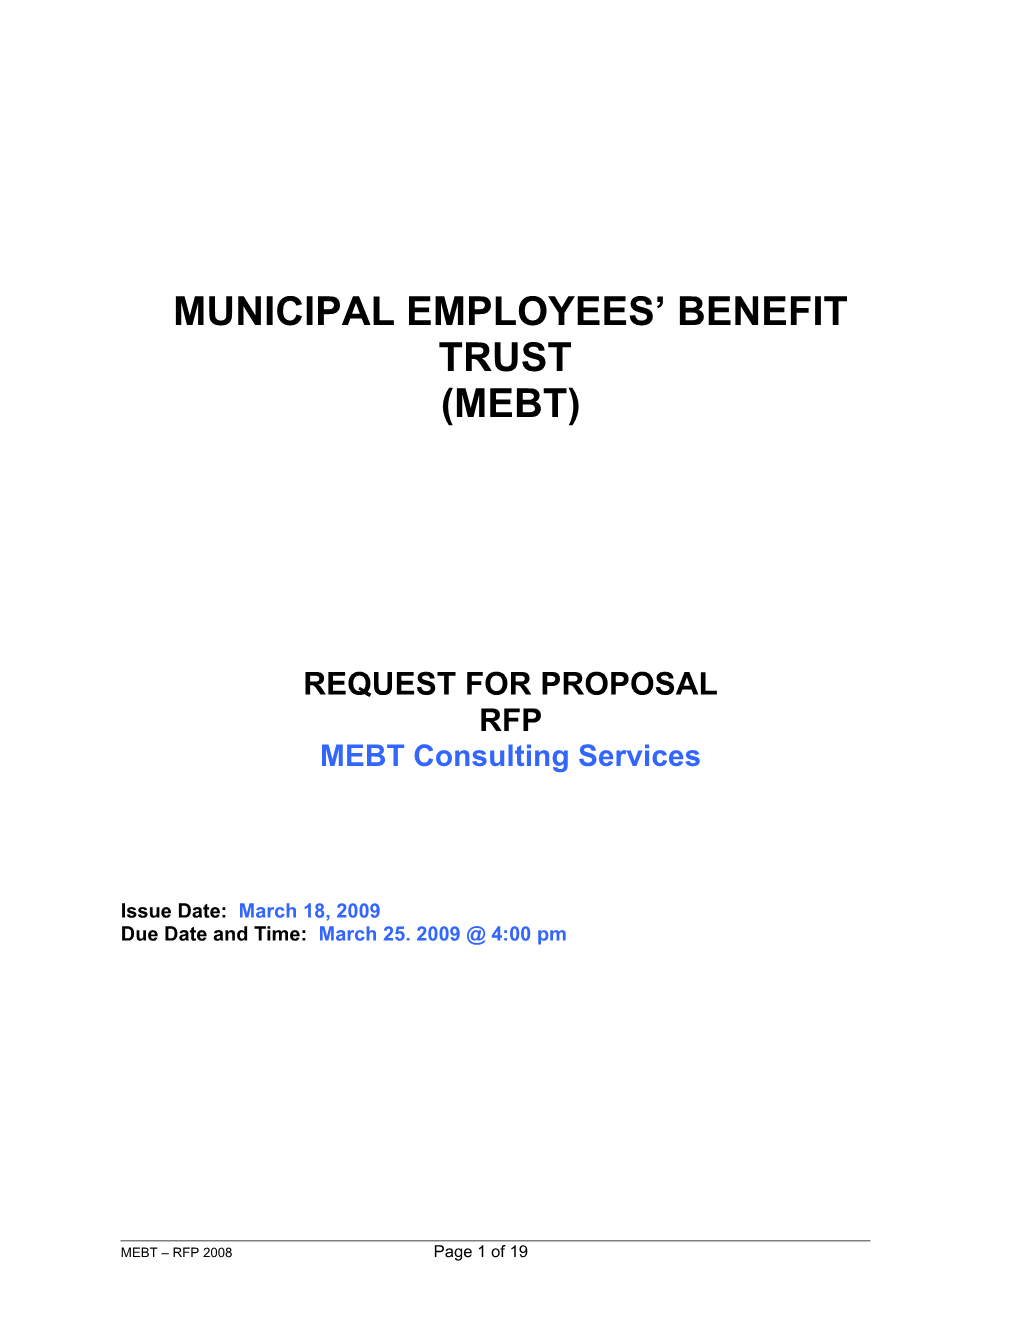 Municipal Employees Benefit Trust